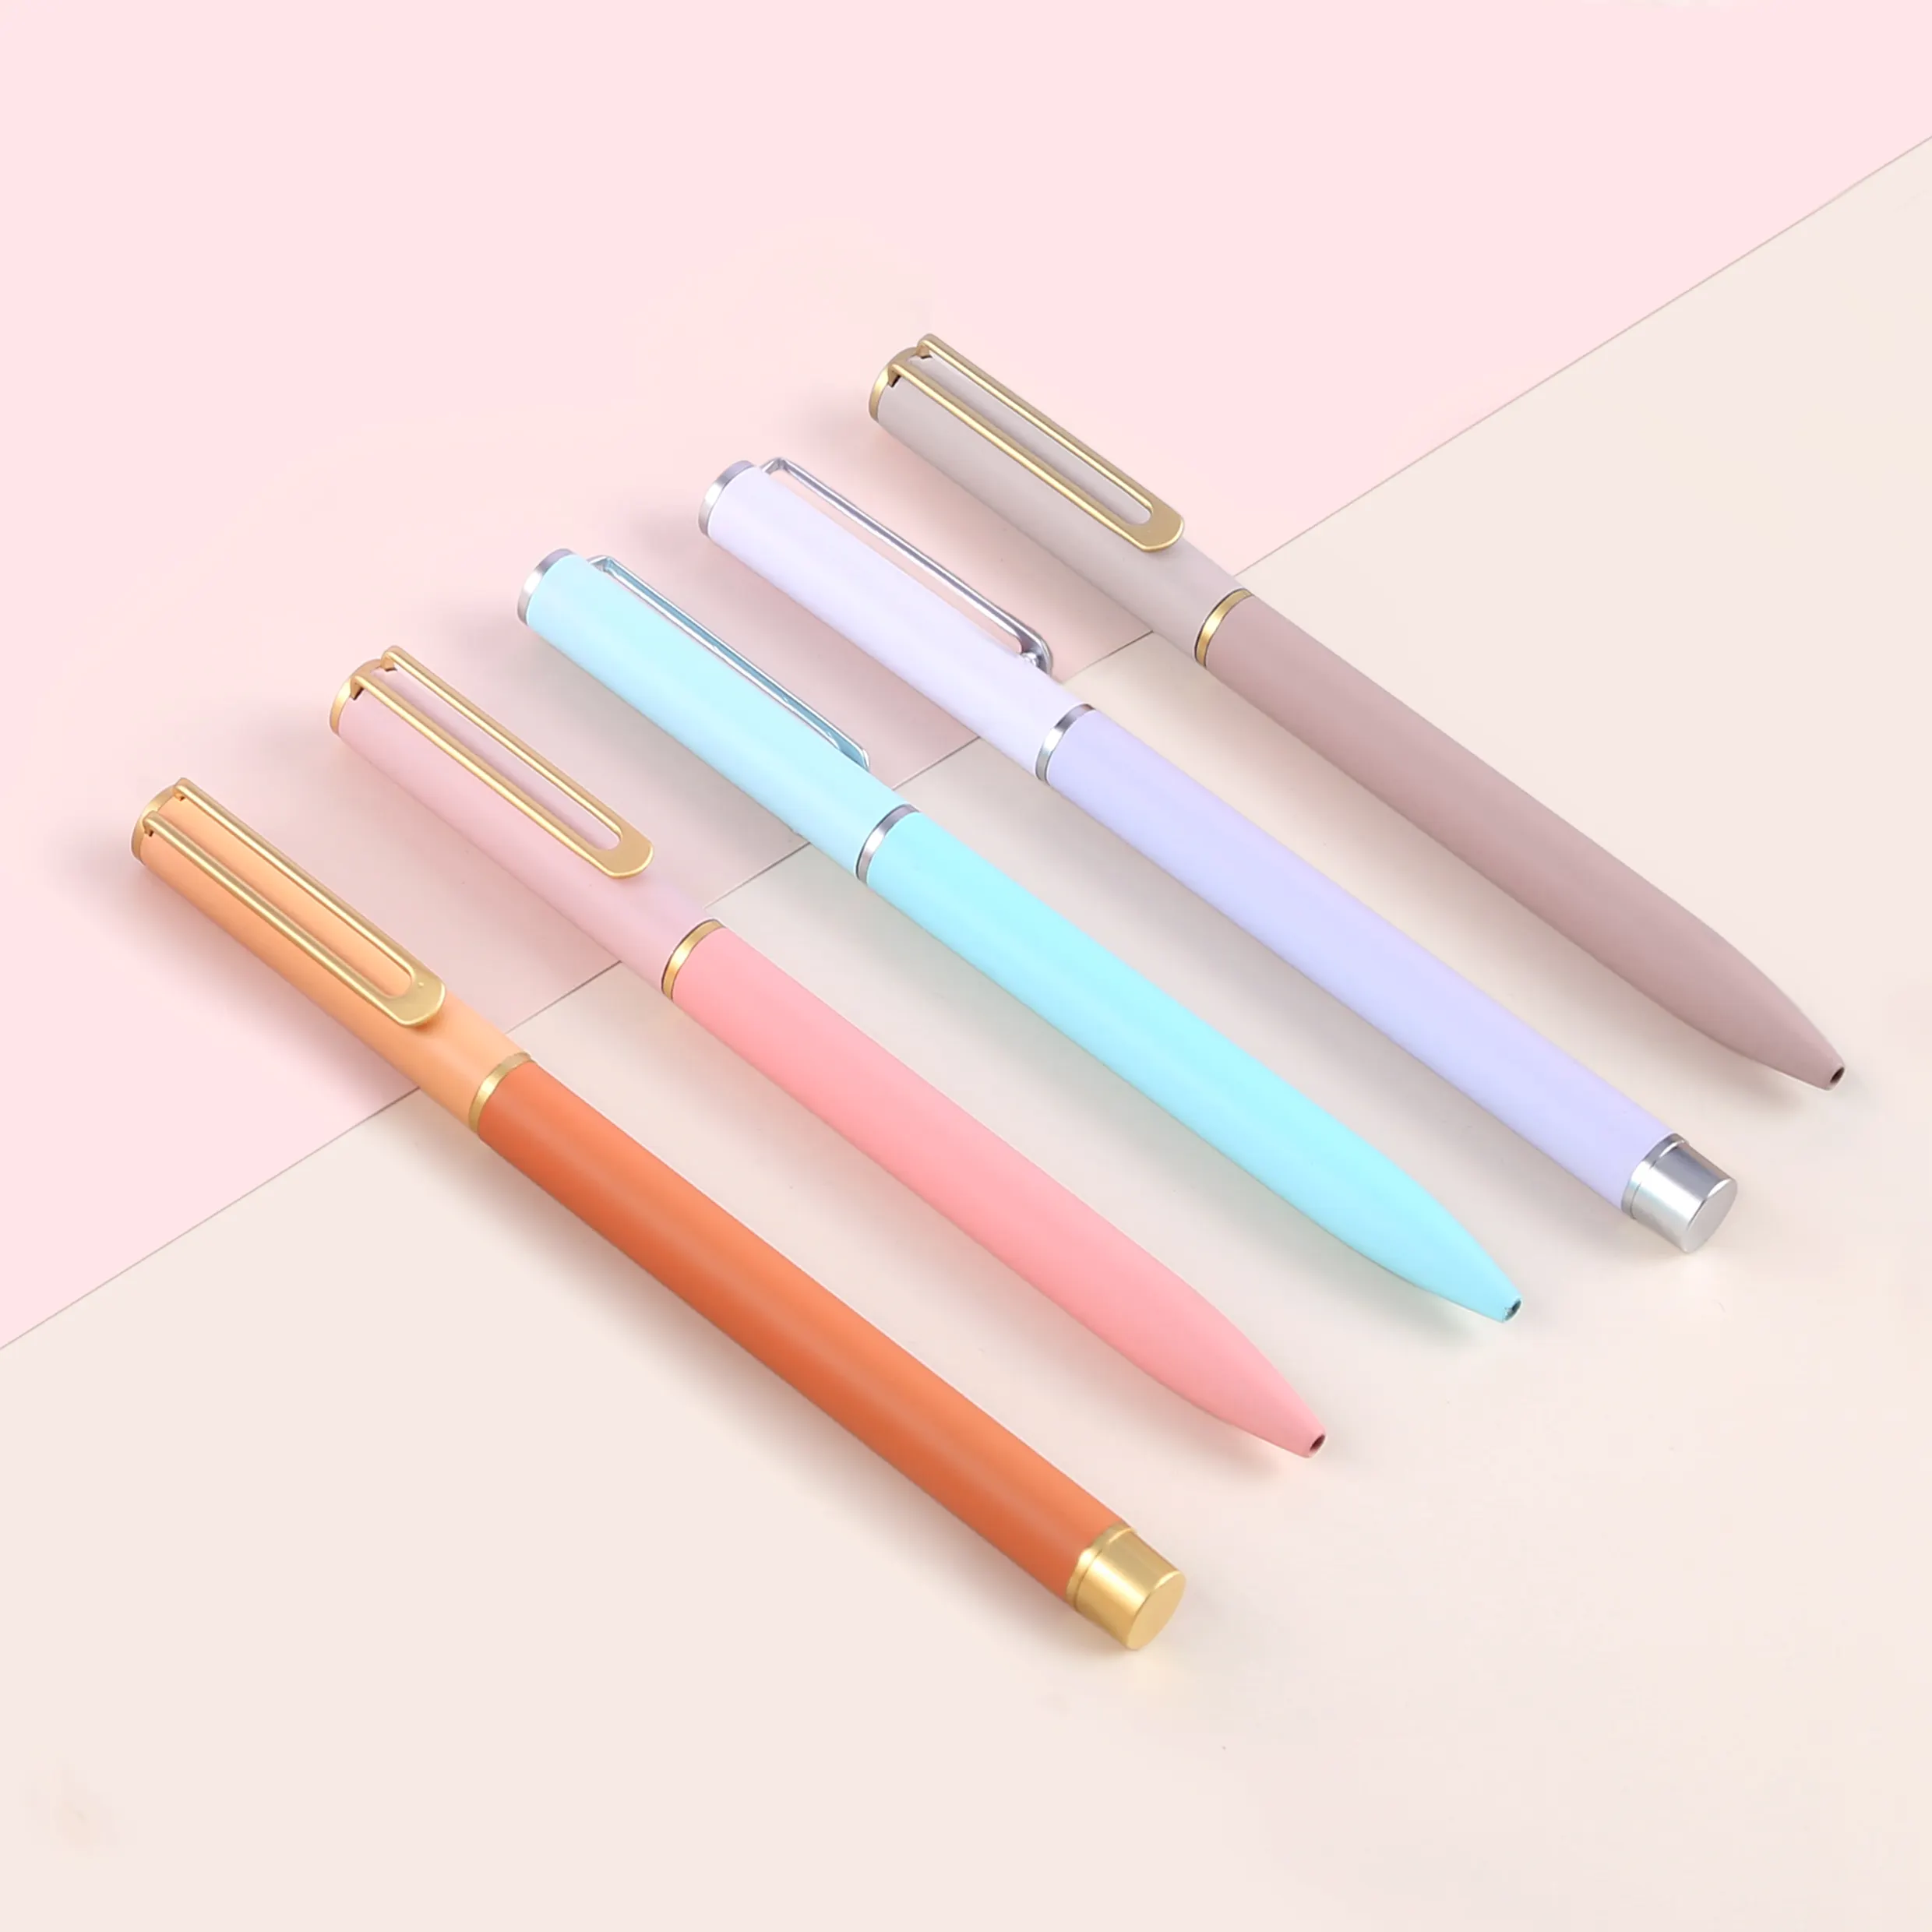 TTX חדש עיצוב התאמת צבעים חמוד יוקרה מתכת kalem פארקר kawaii עט מתנה לחג המולד כדור נקודת עט עם לוגו מותאם אישית